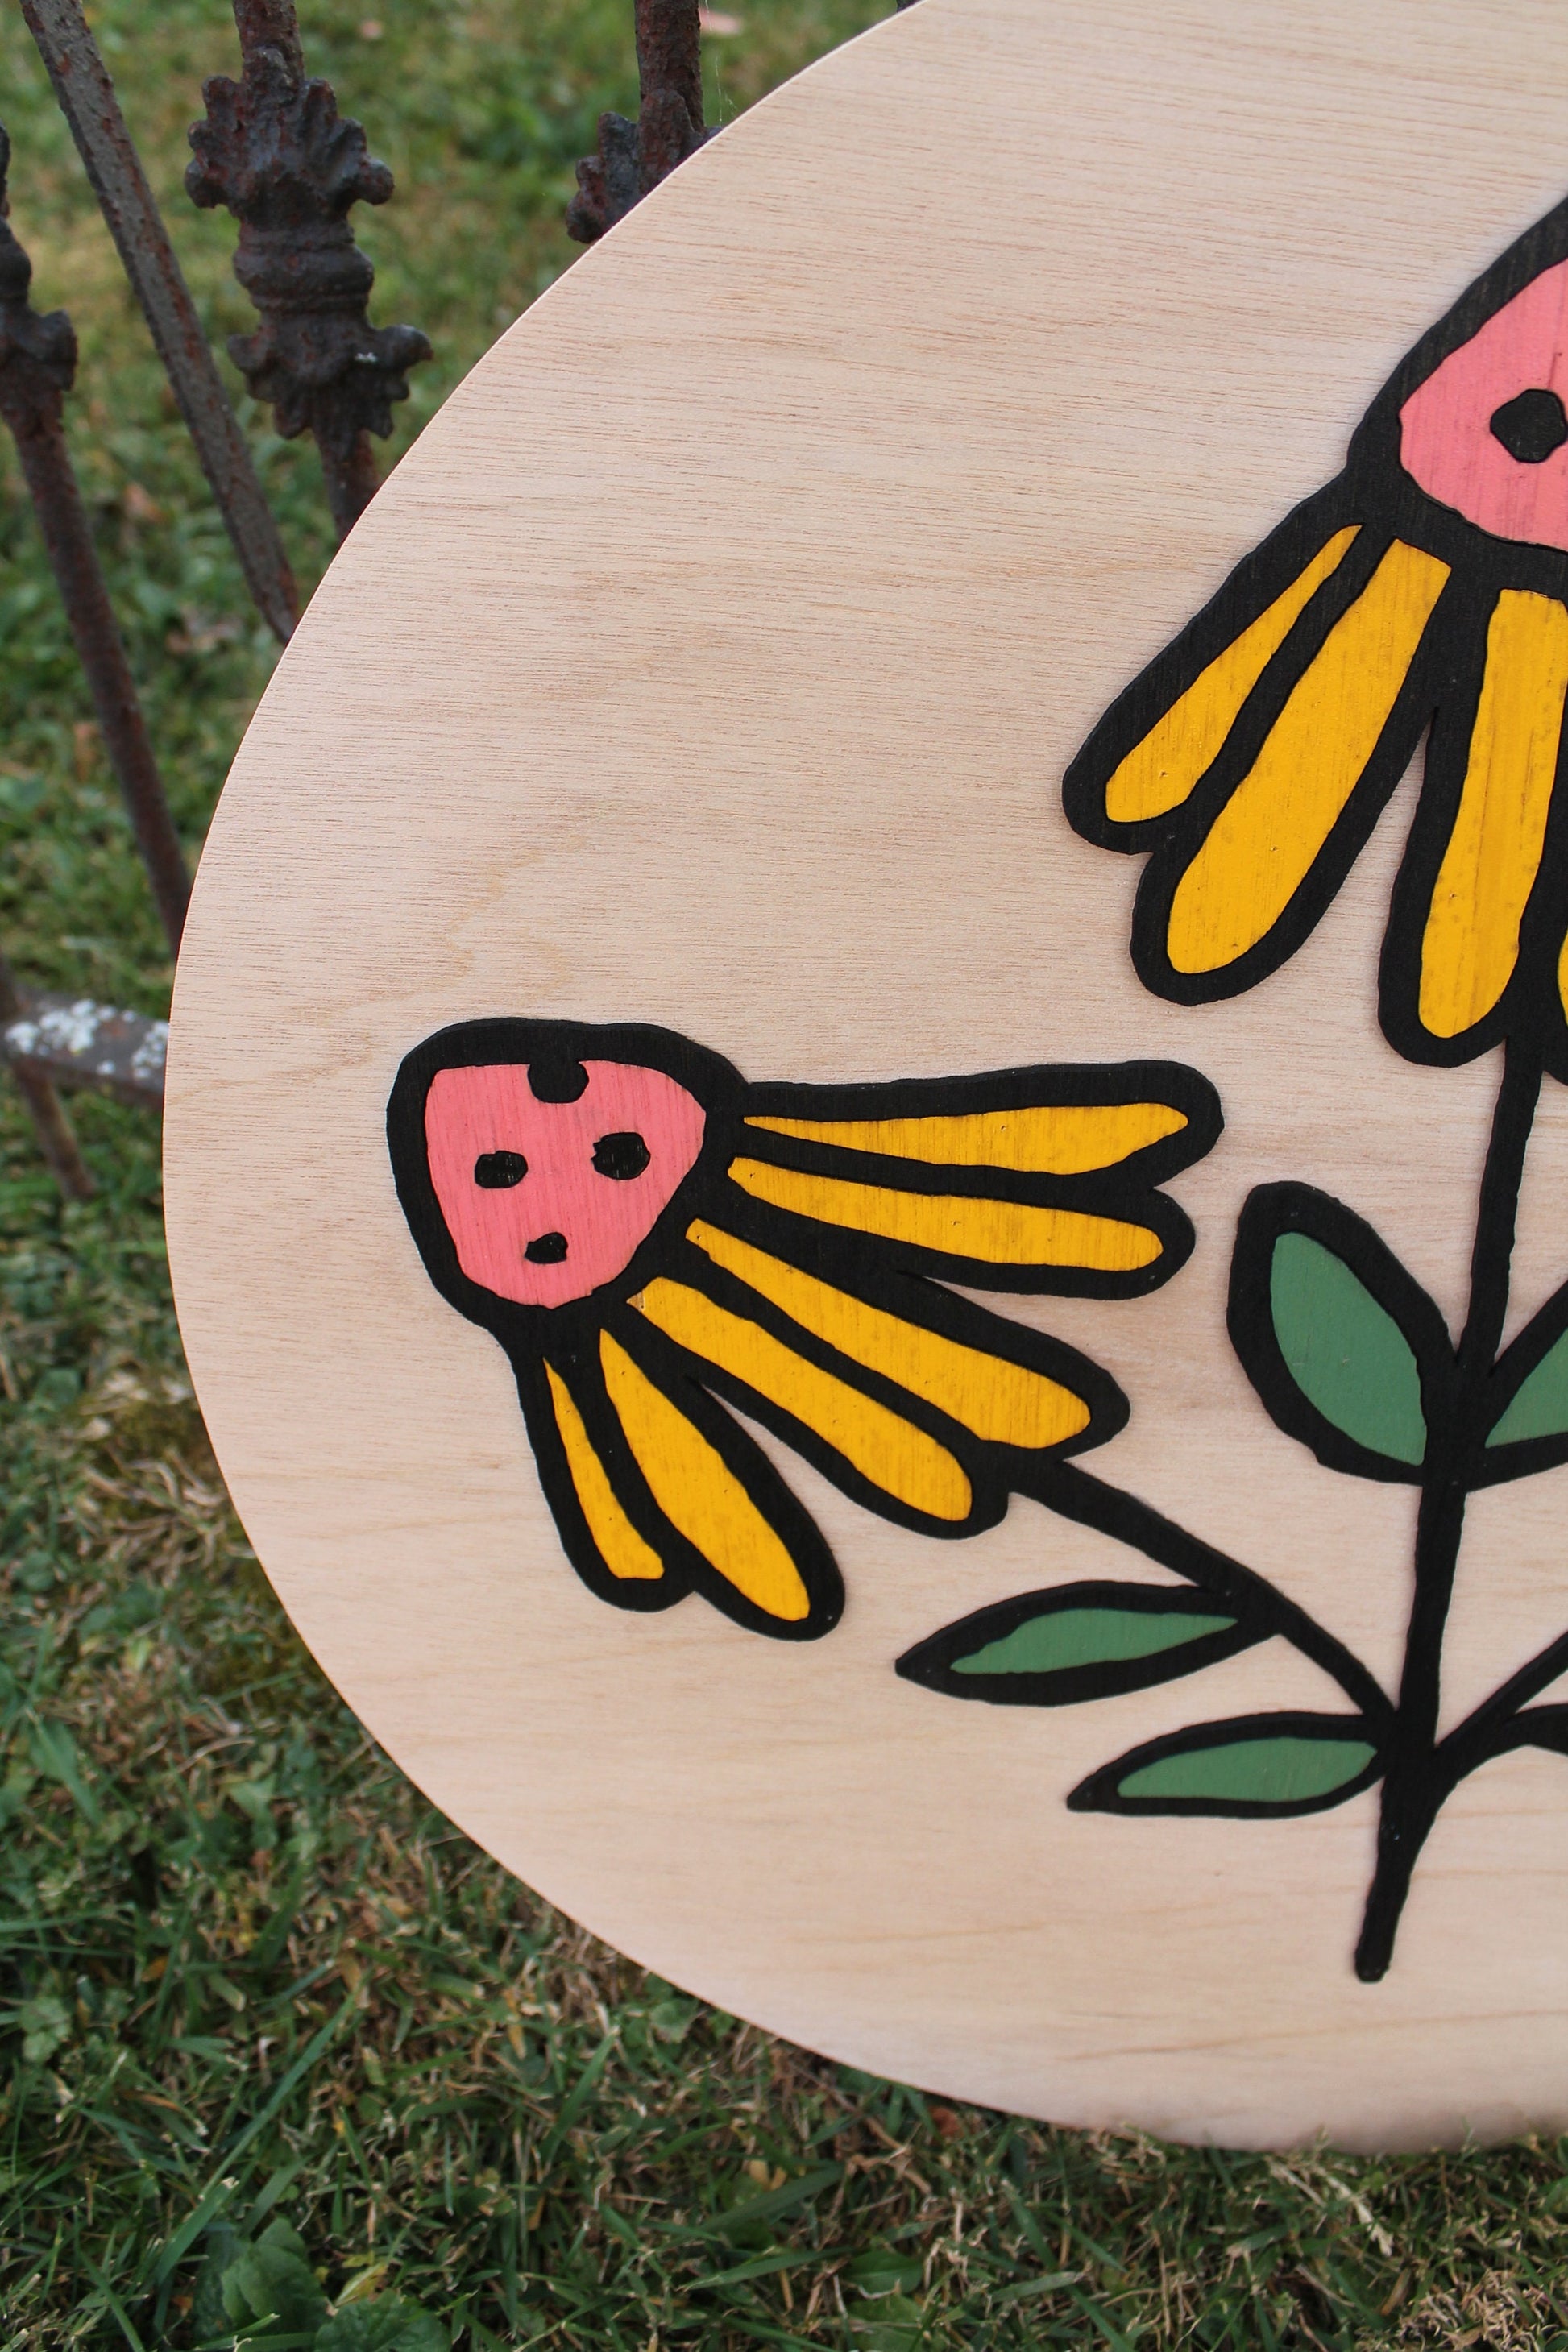 Flower Wildflower 3D Daisy Coneflower Handmade Round Wooden Sign Custom Personalized Logo Circle Raised Yellow Garden